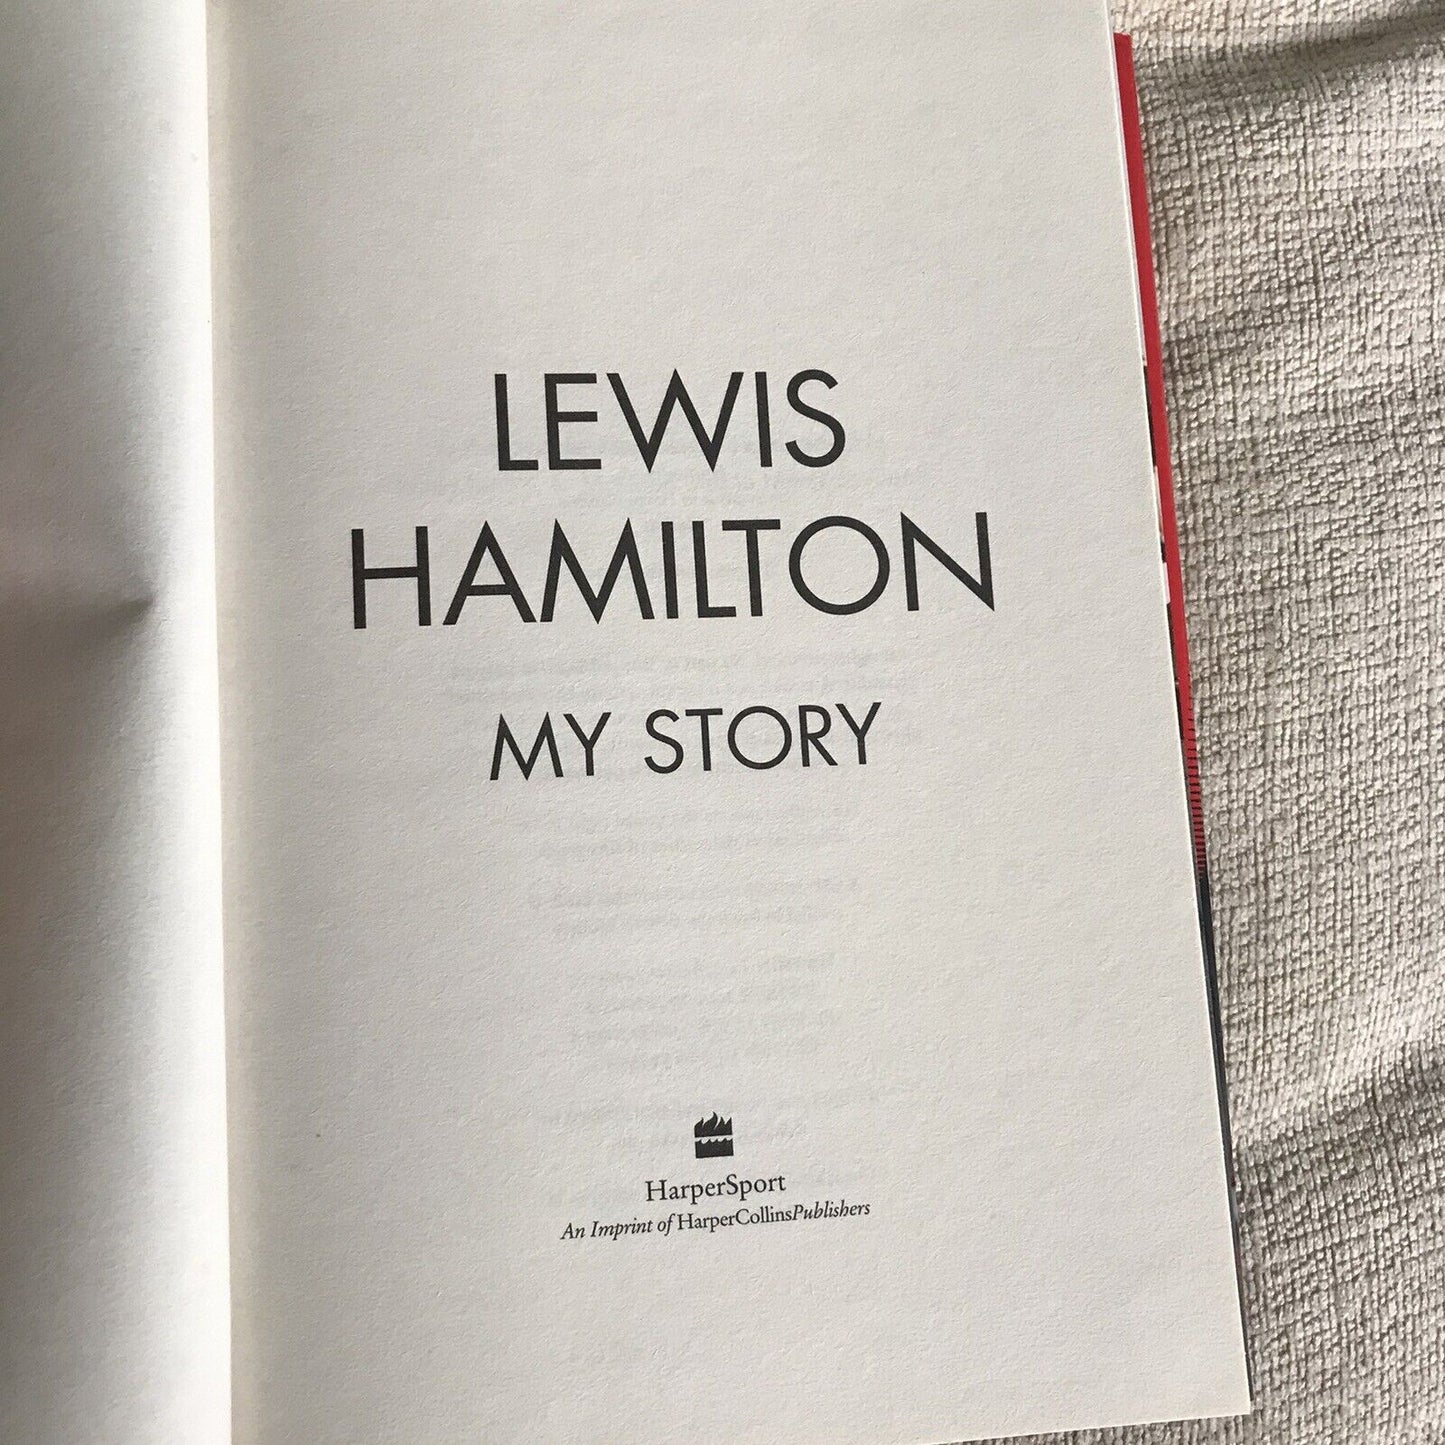 Lewis Hamilton: My Story by Lewis Hamilton (Hardback, 2007)